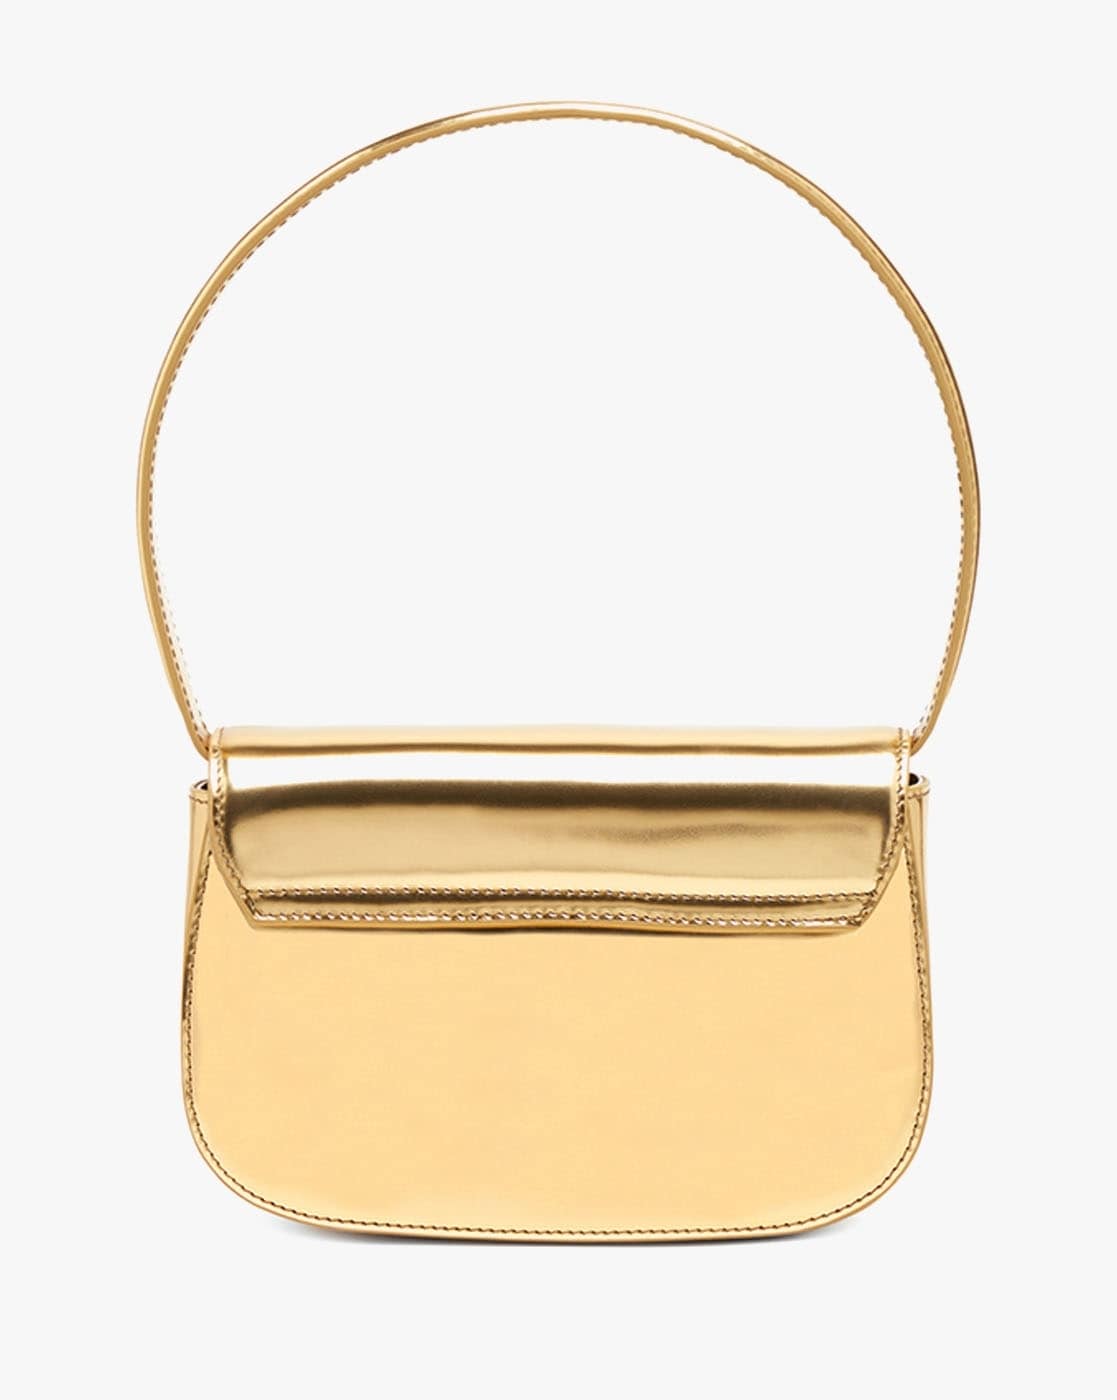 Gold Rayne Clutch Handbag by Loeffler Randall - T H E W H I T E & G O L D